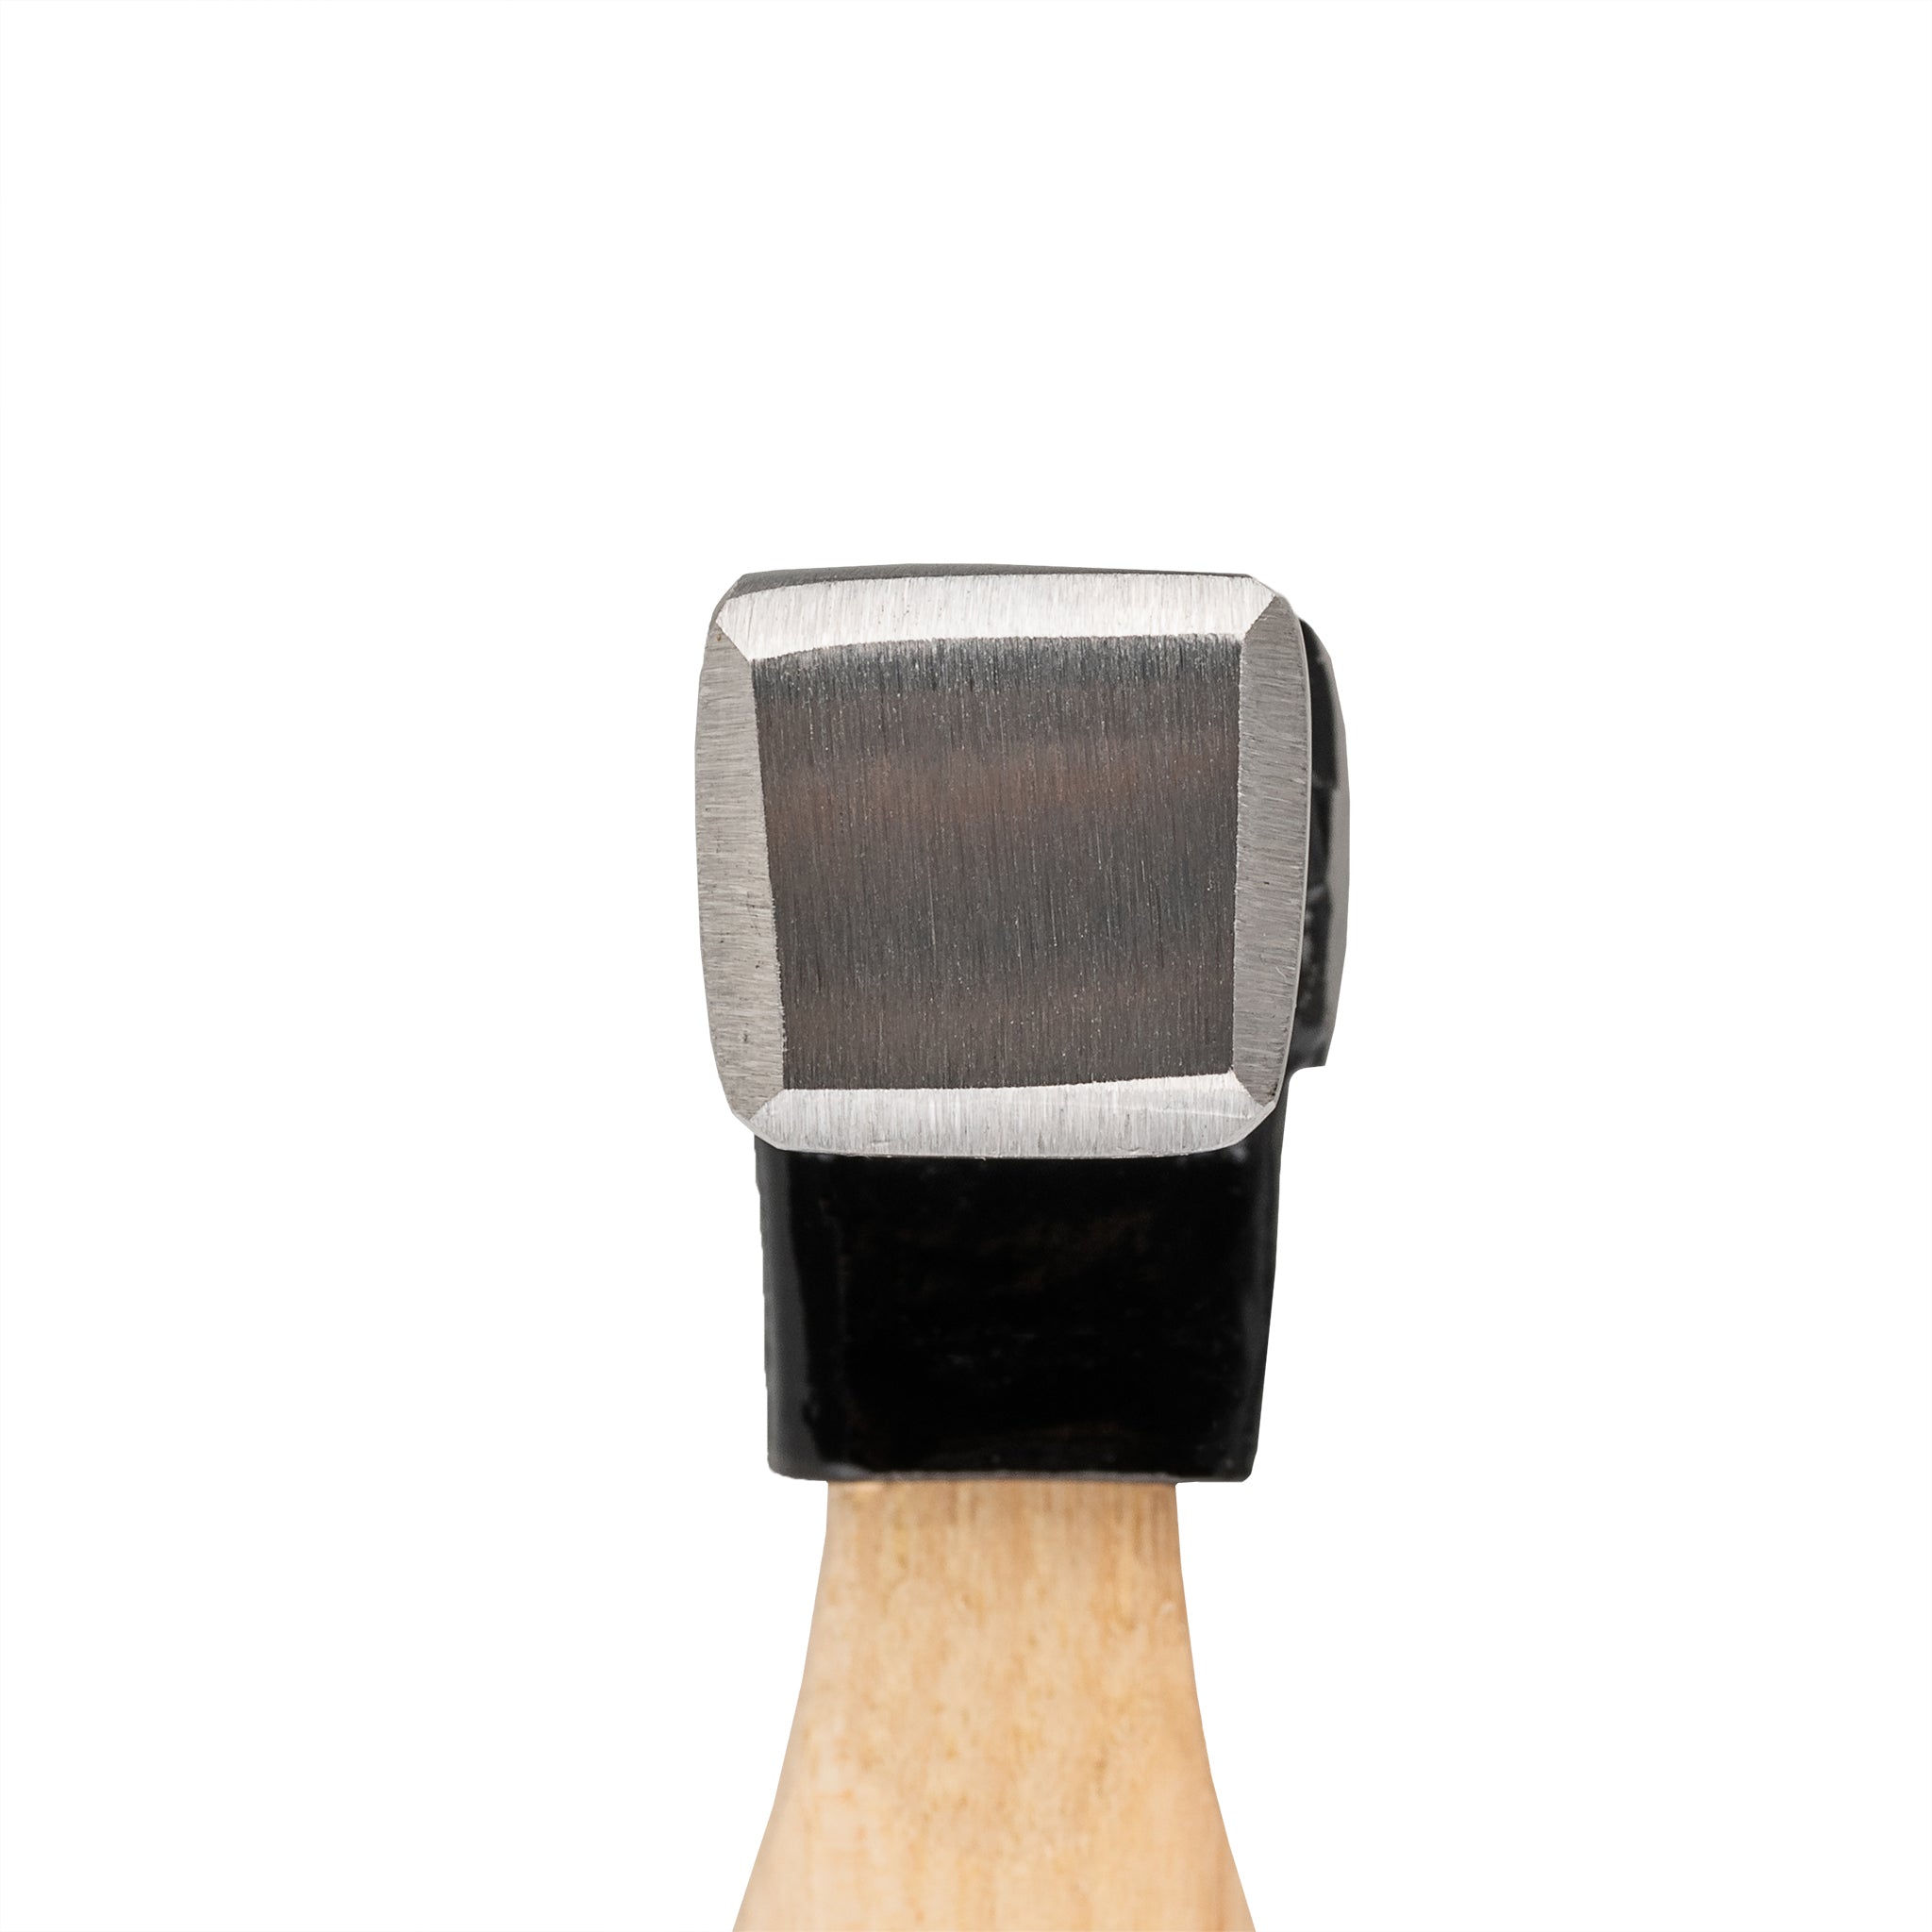 24 oz. Smooth Square Head Bricklayer Hammer